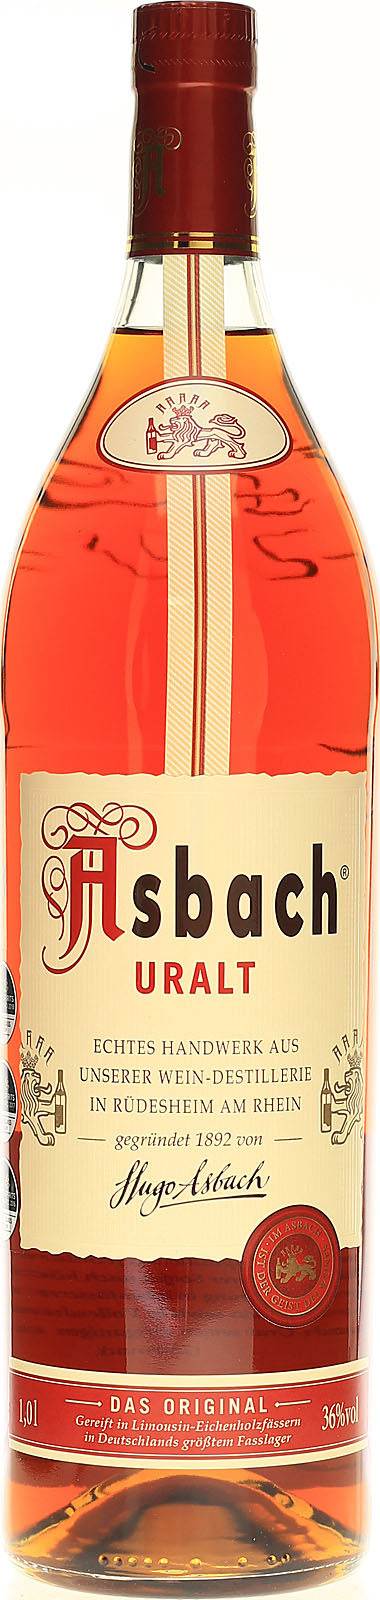 Uralt, deutscher Asbach Weinbrand